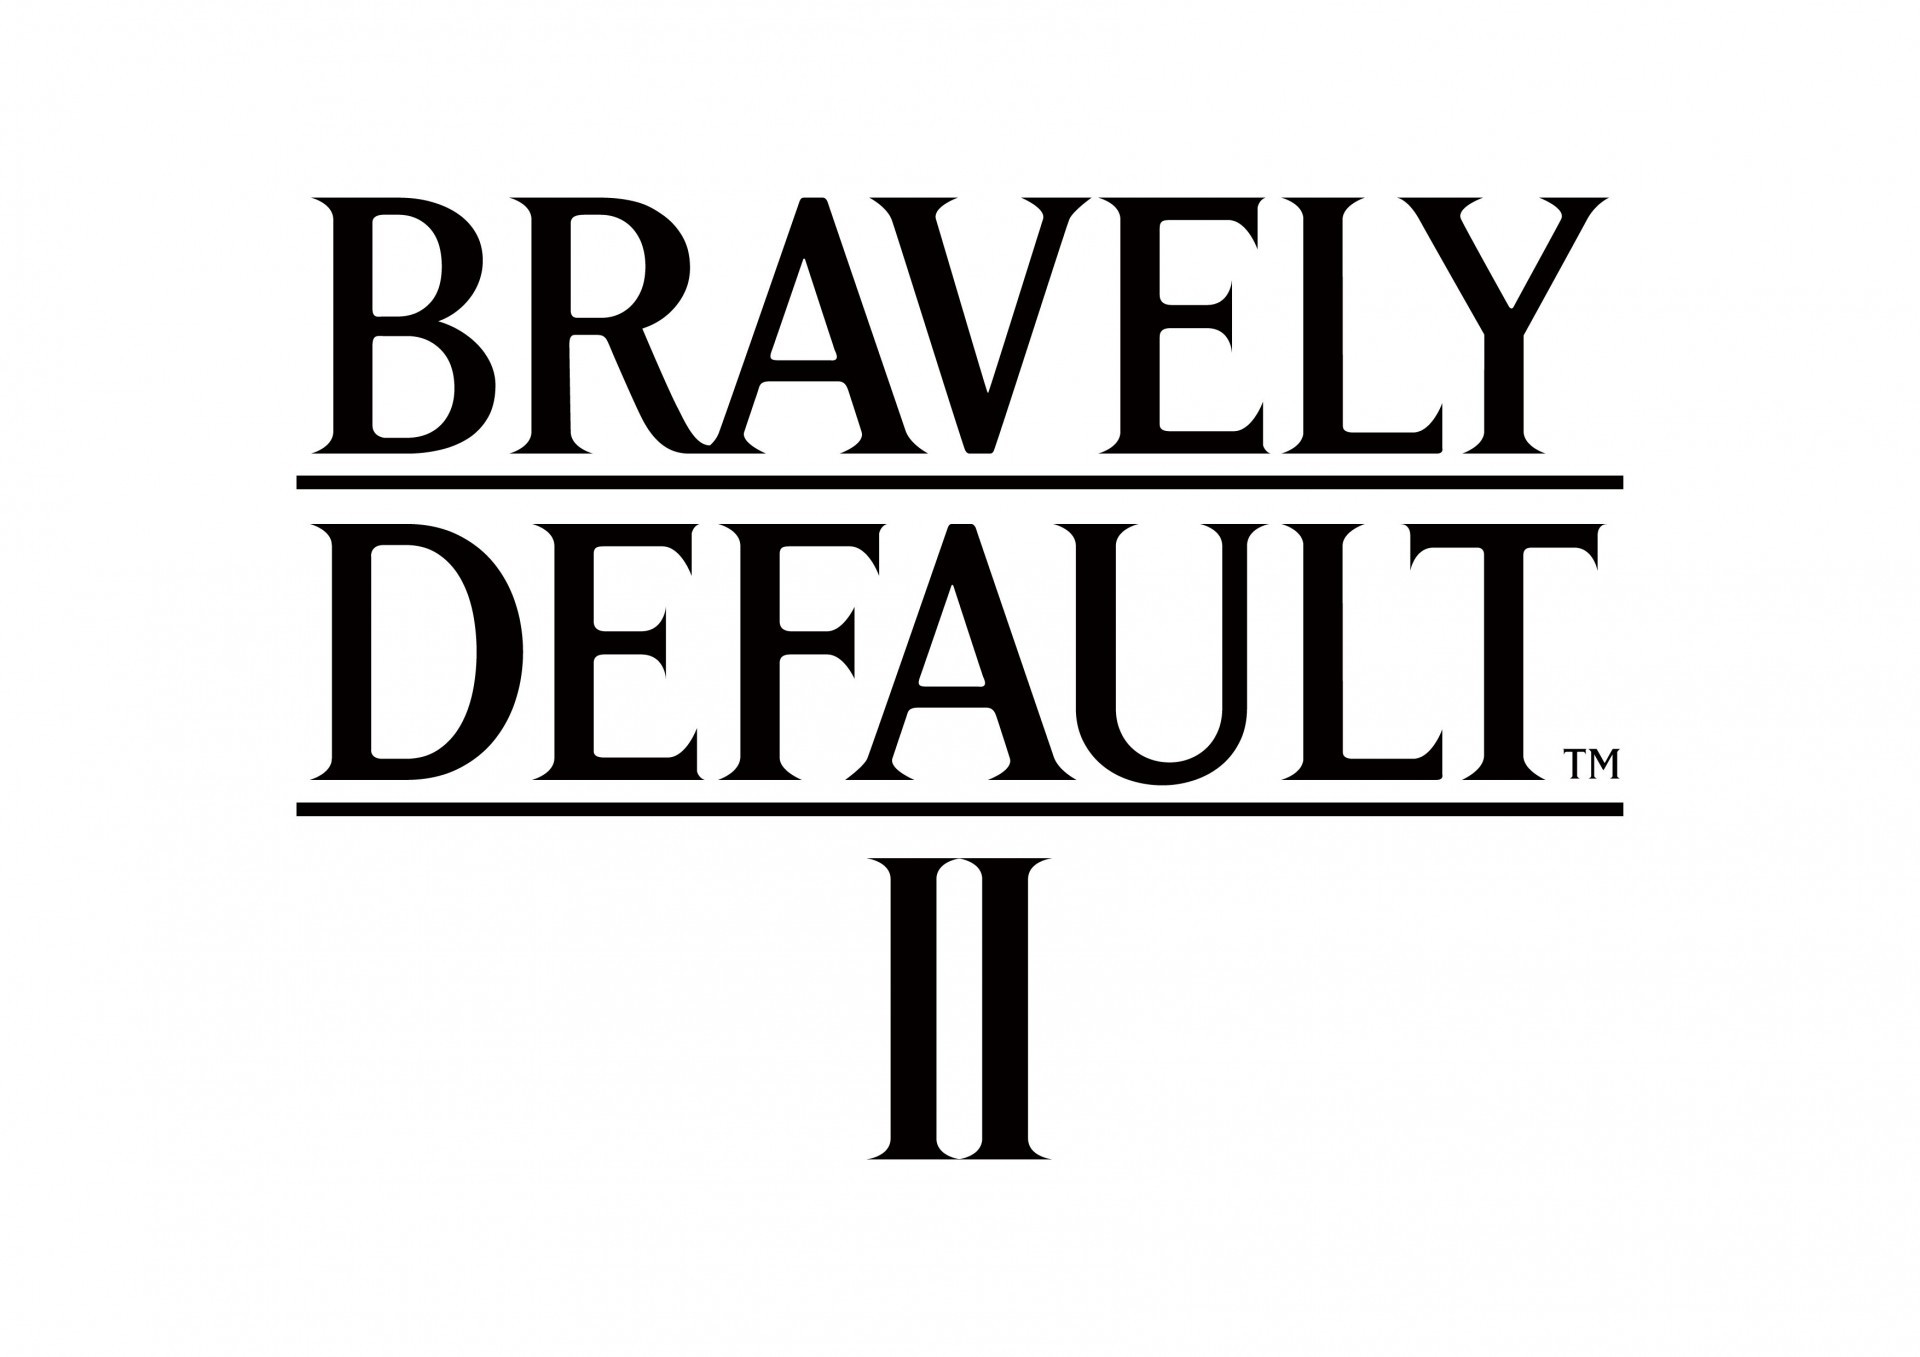 《Bravely Default II》中文数位版开放预购 将释出中文字幕版问卷调查回应影片